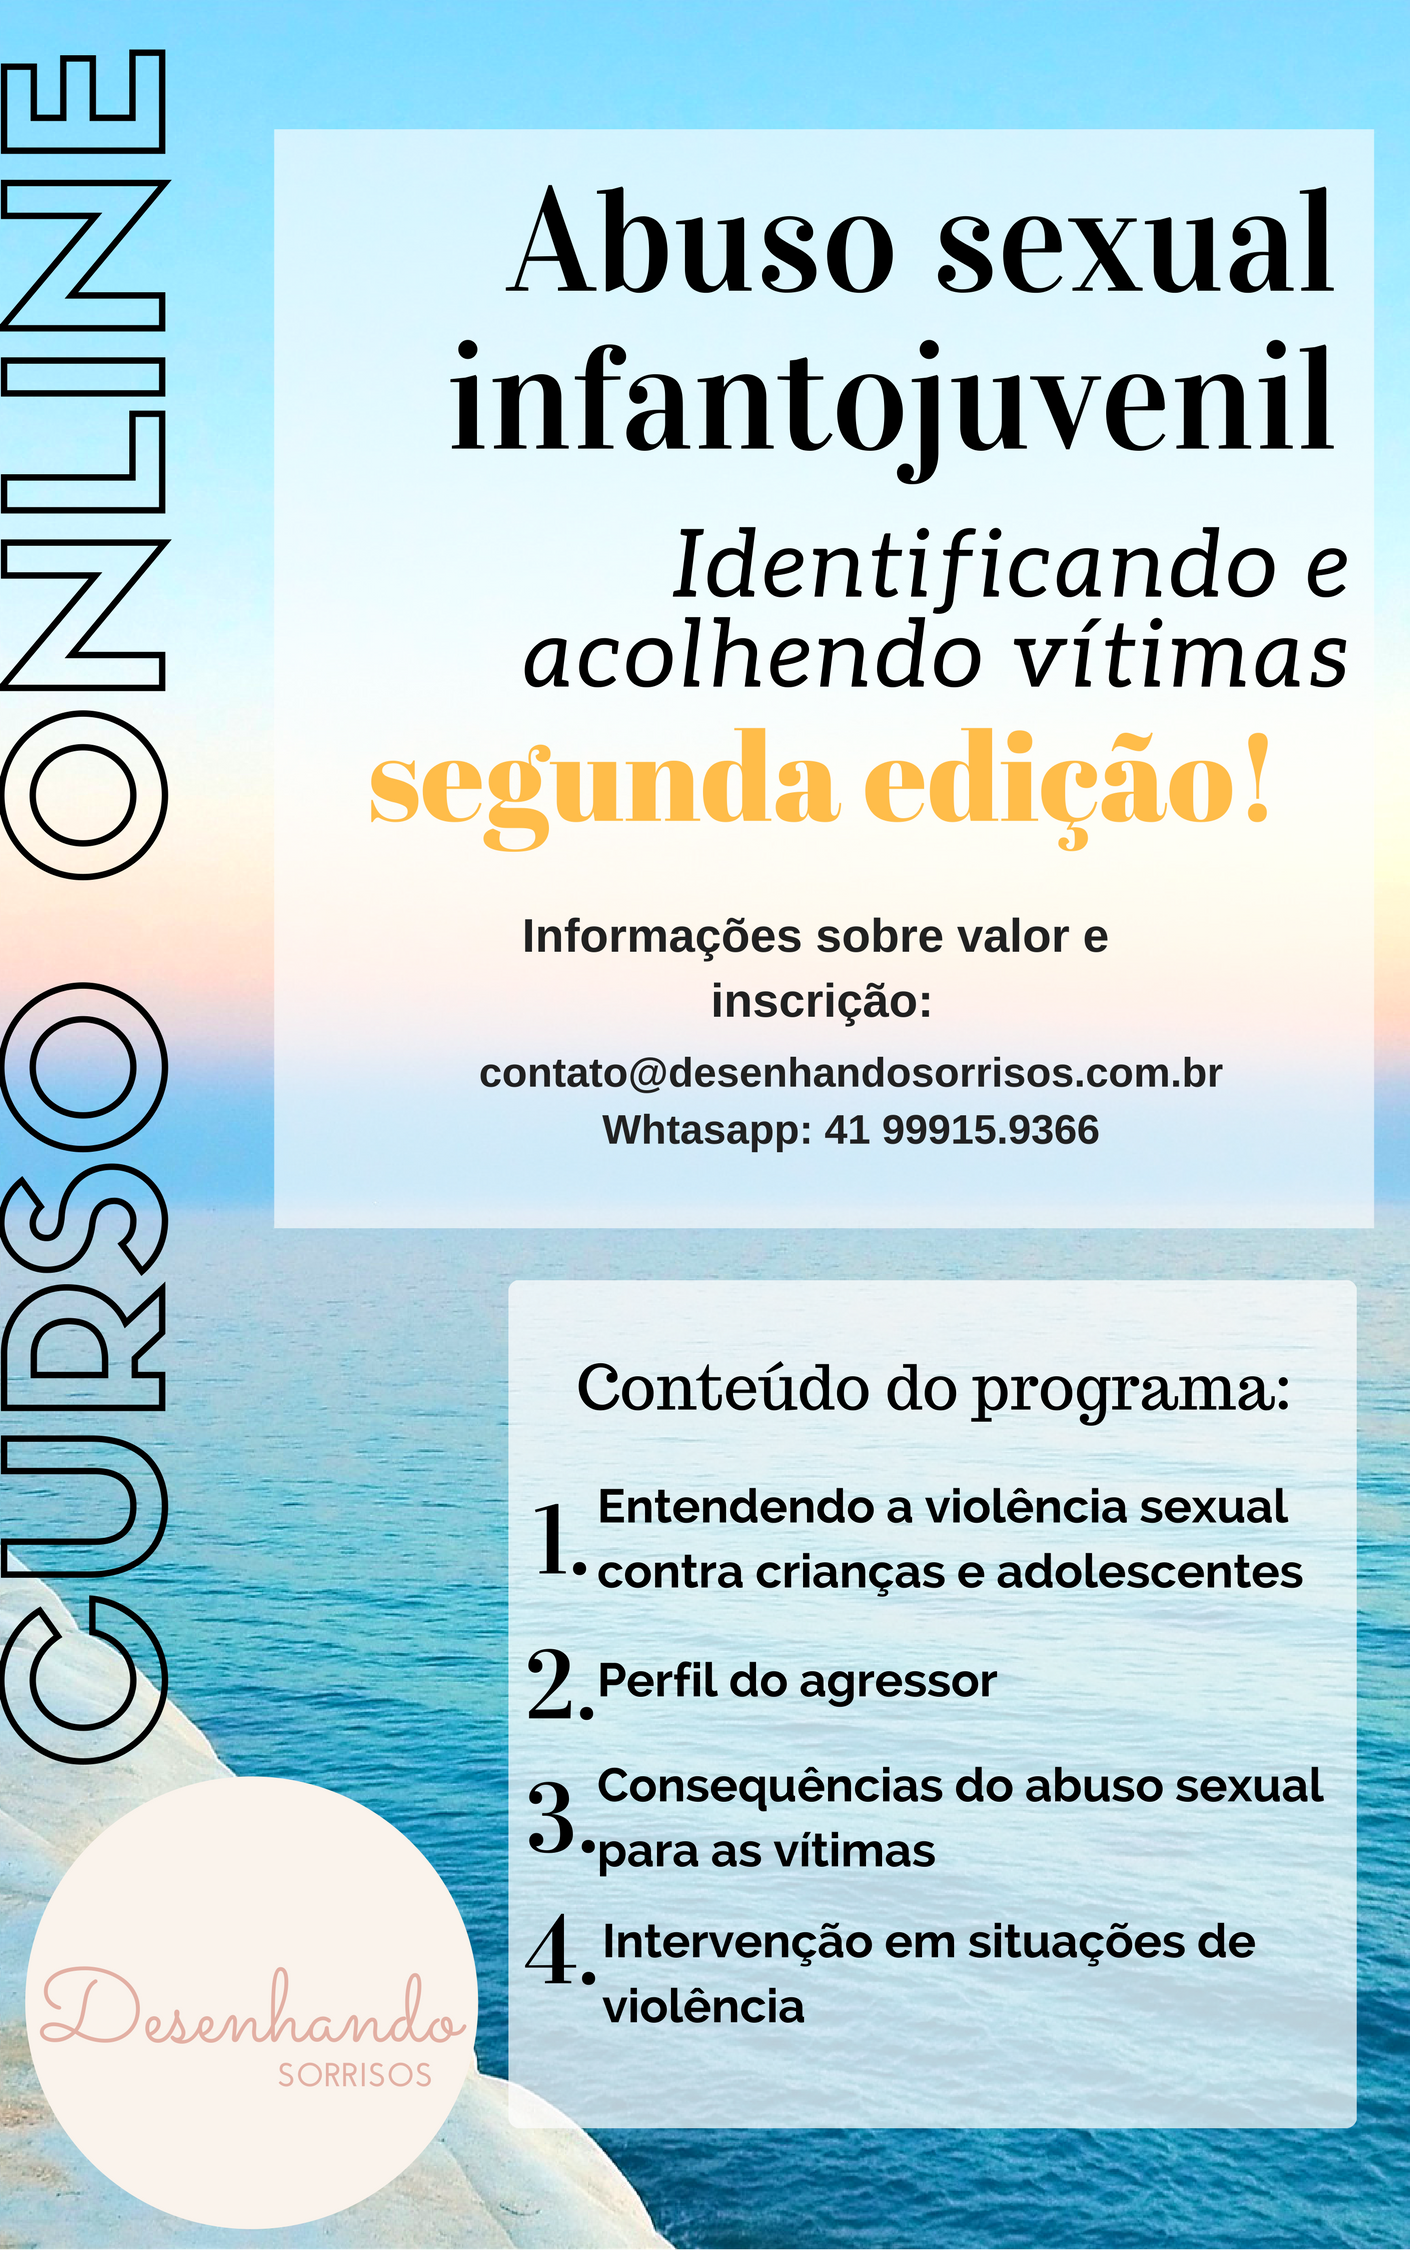 Curso Online: Abuso sexual infantojuvenil - identificando e acolhendo vítimas.